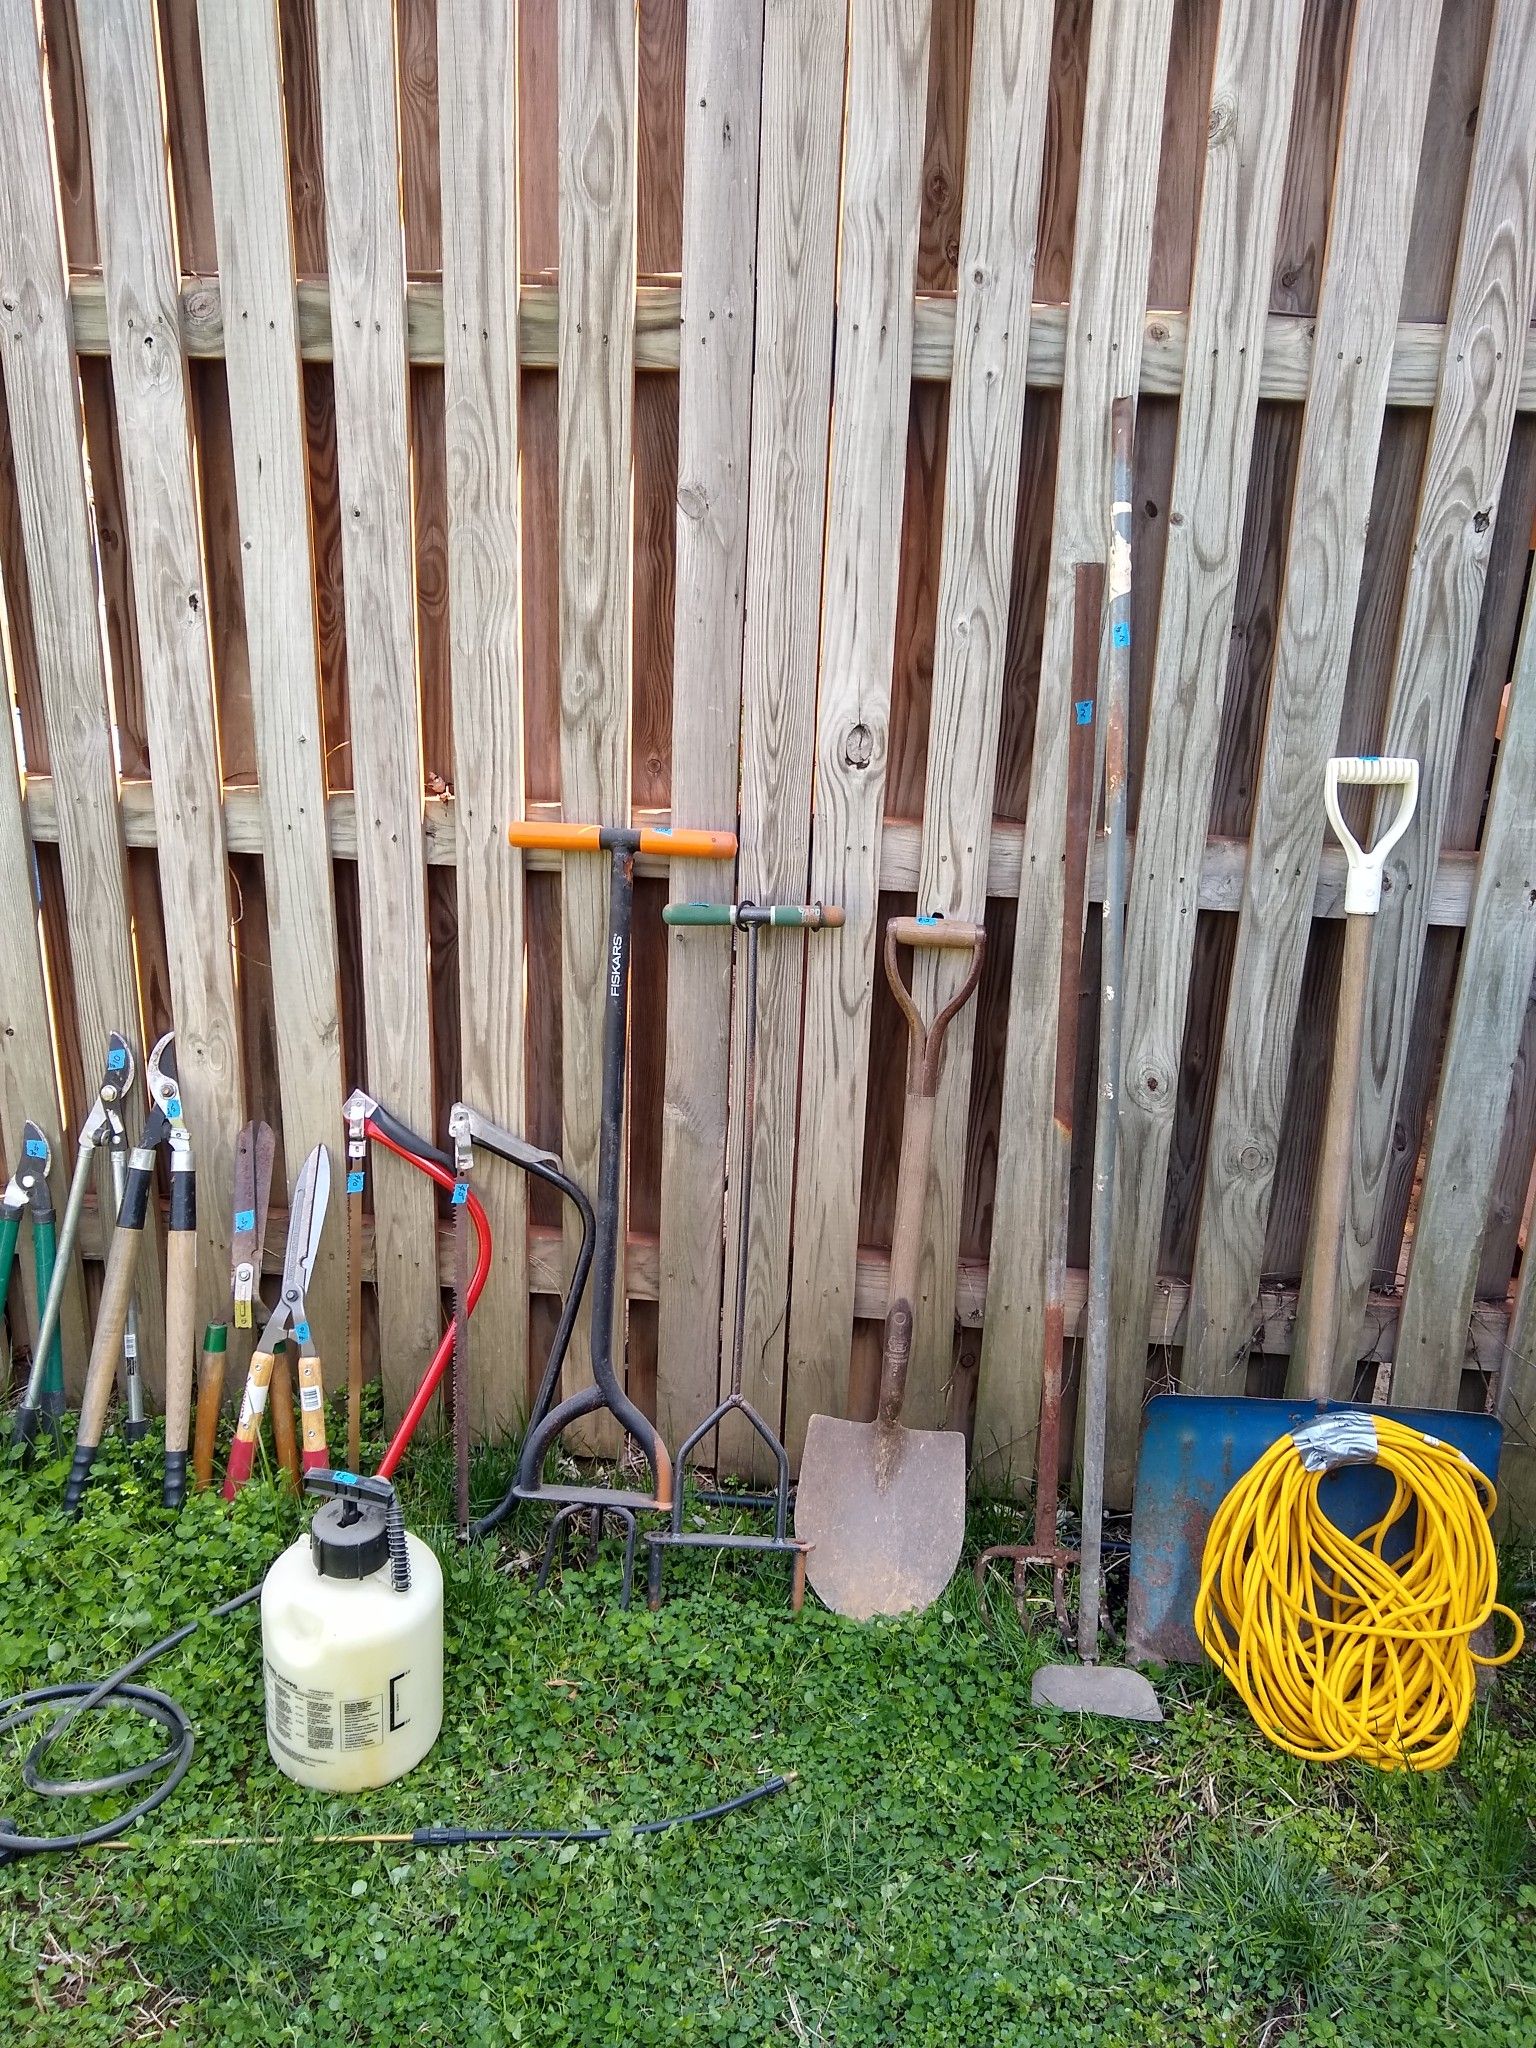 Garden tools - shears, bow saws, soil aerators, sprayer, etc